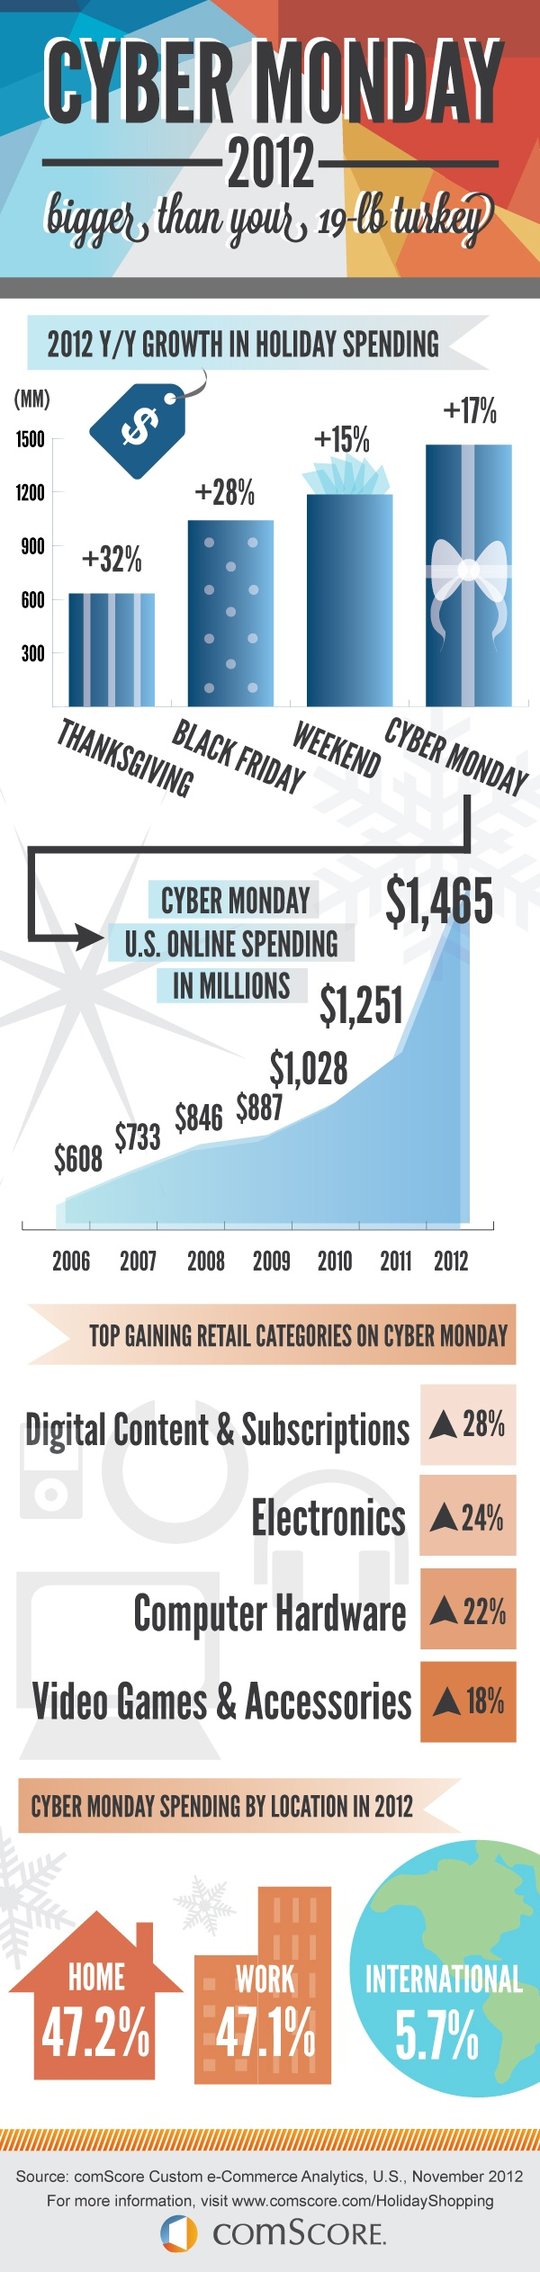 CyberMonday statistics 2012